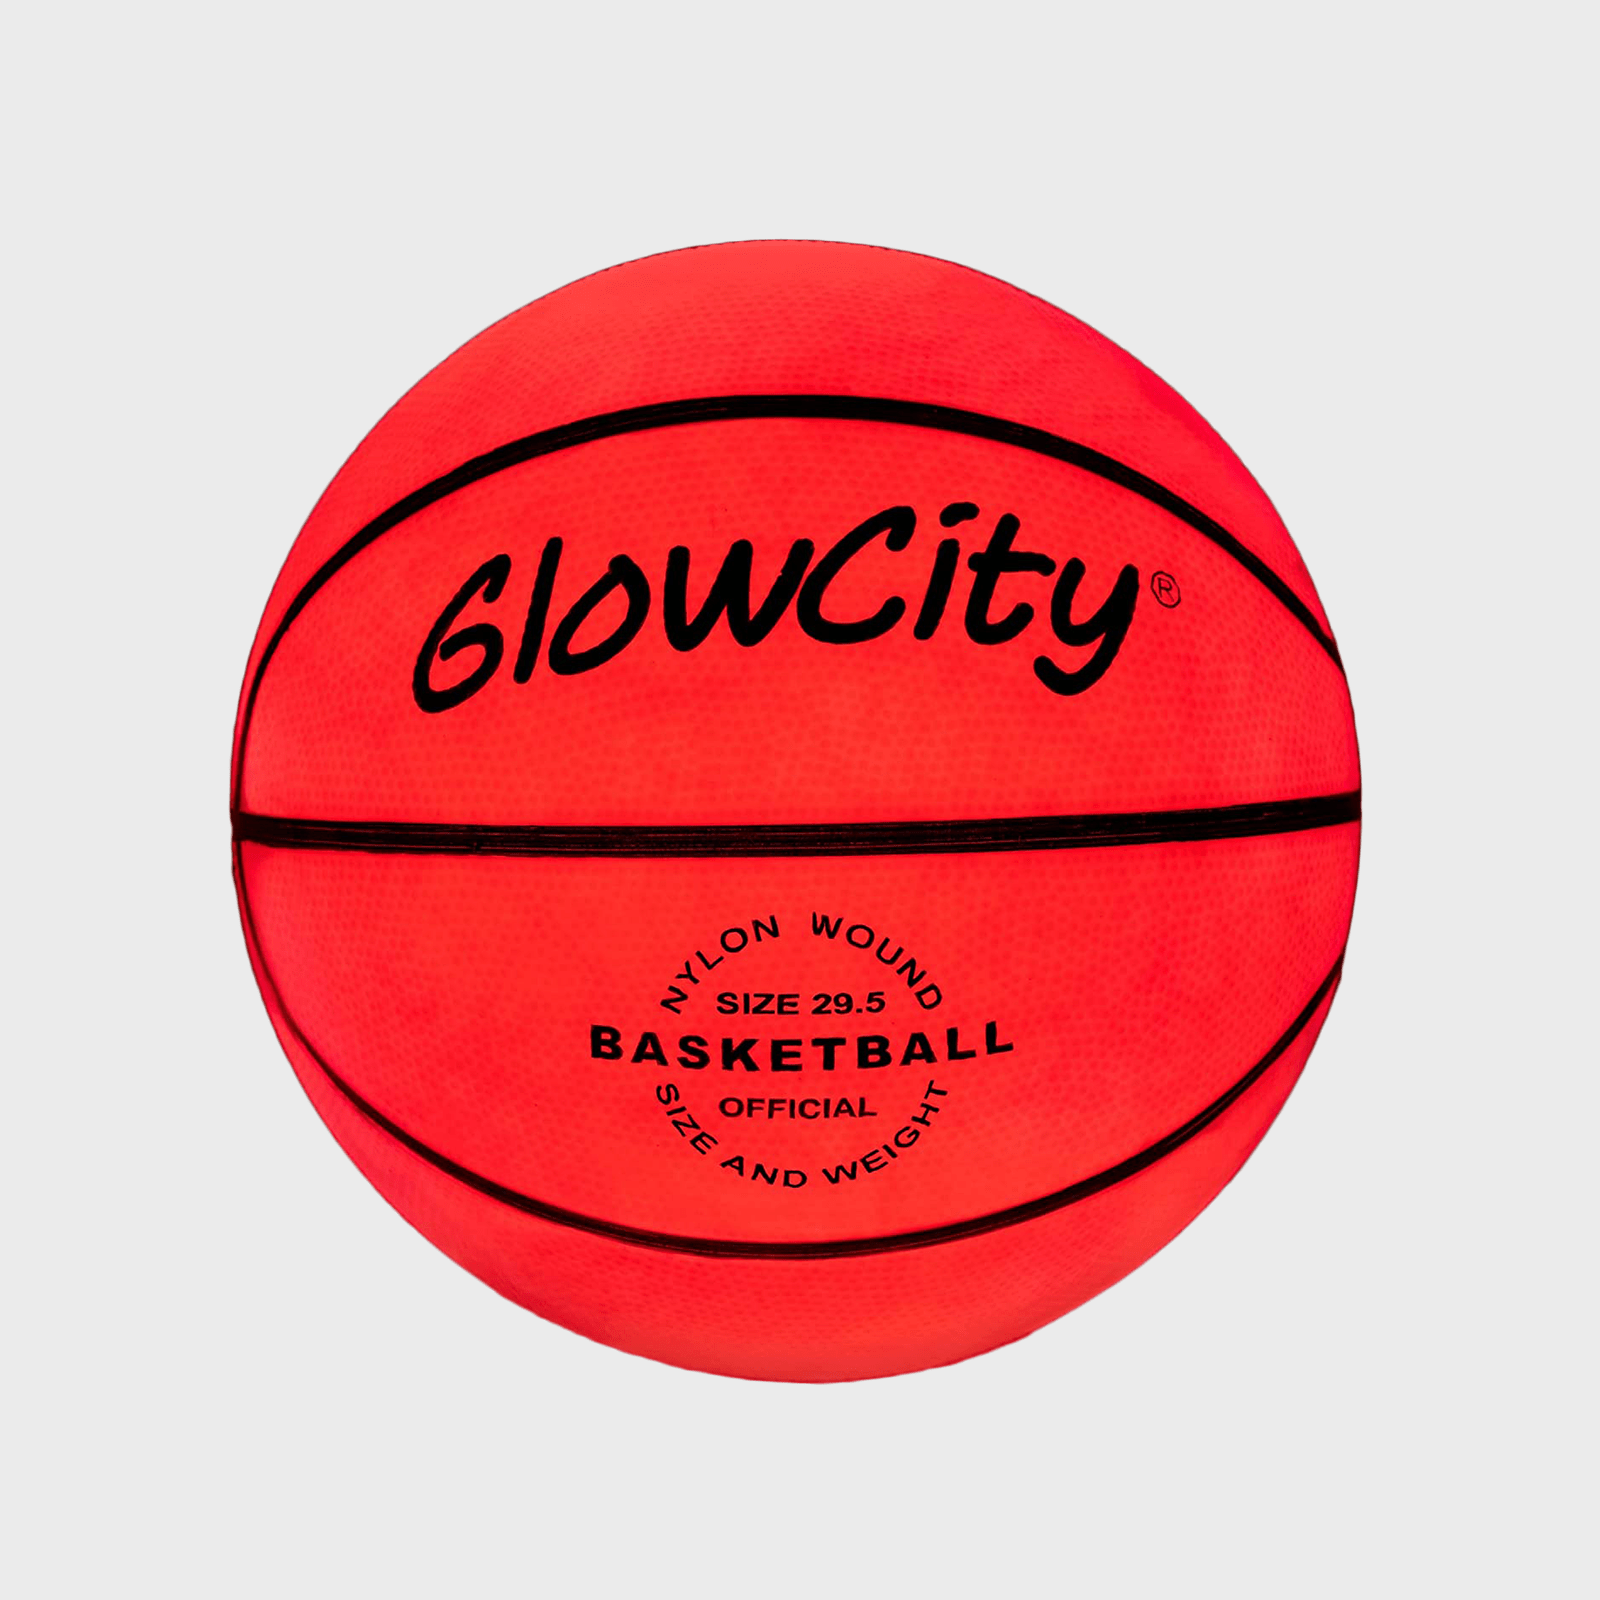 GlowCity Glow in The Dark Basketball for Teen Boy - Basketball